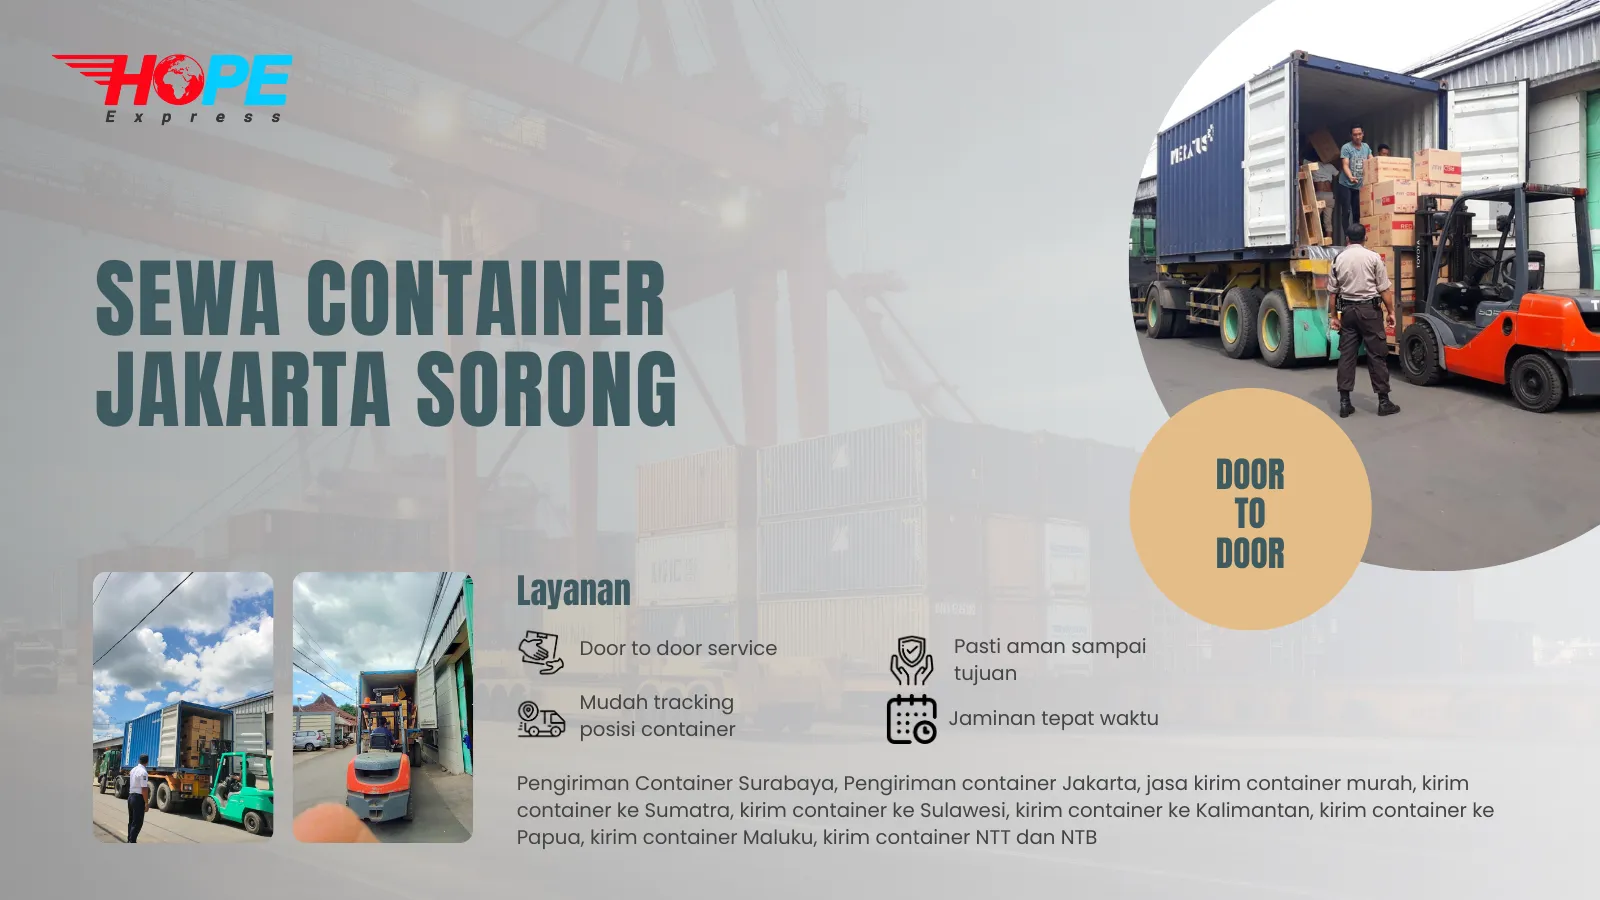 Sewa Container Jakarta Sorong